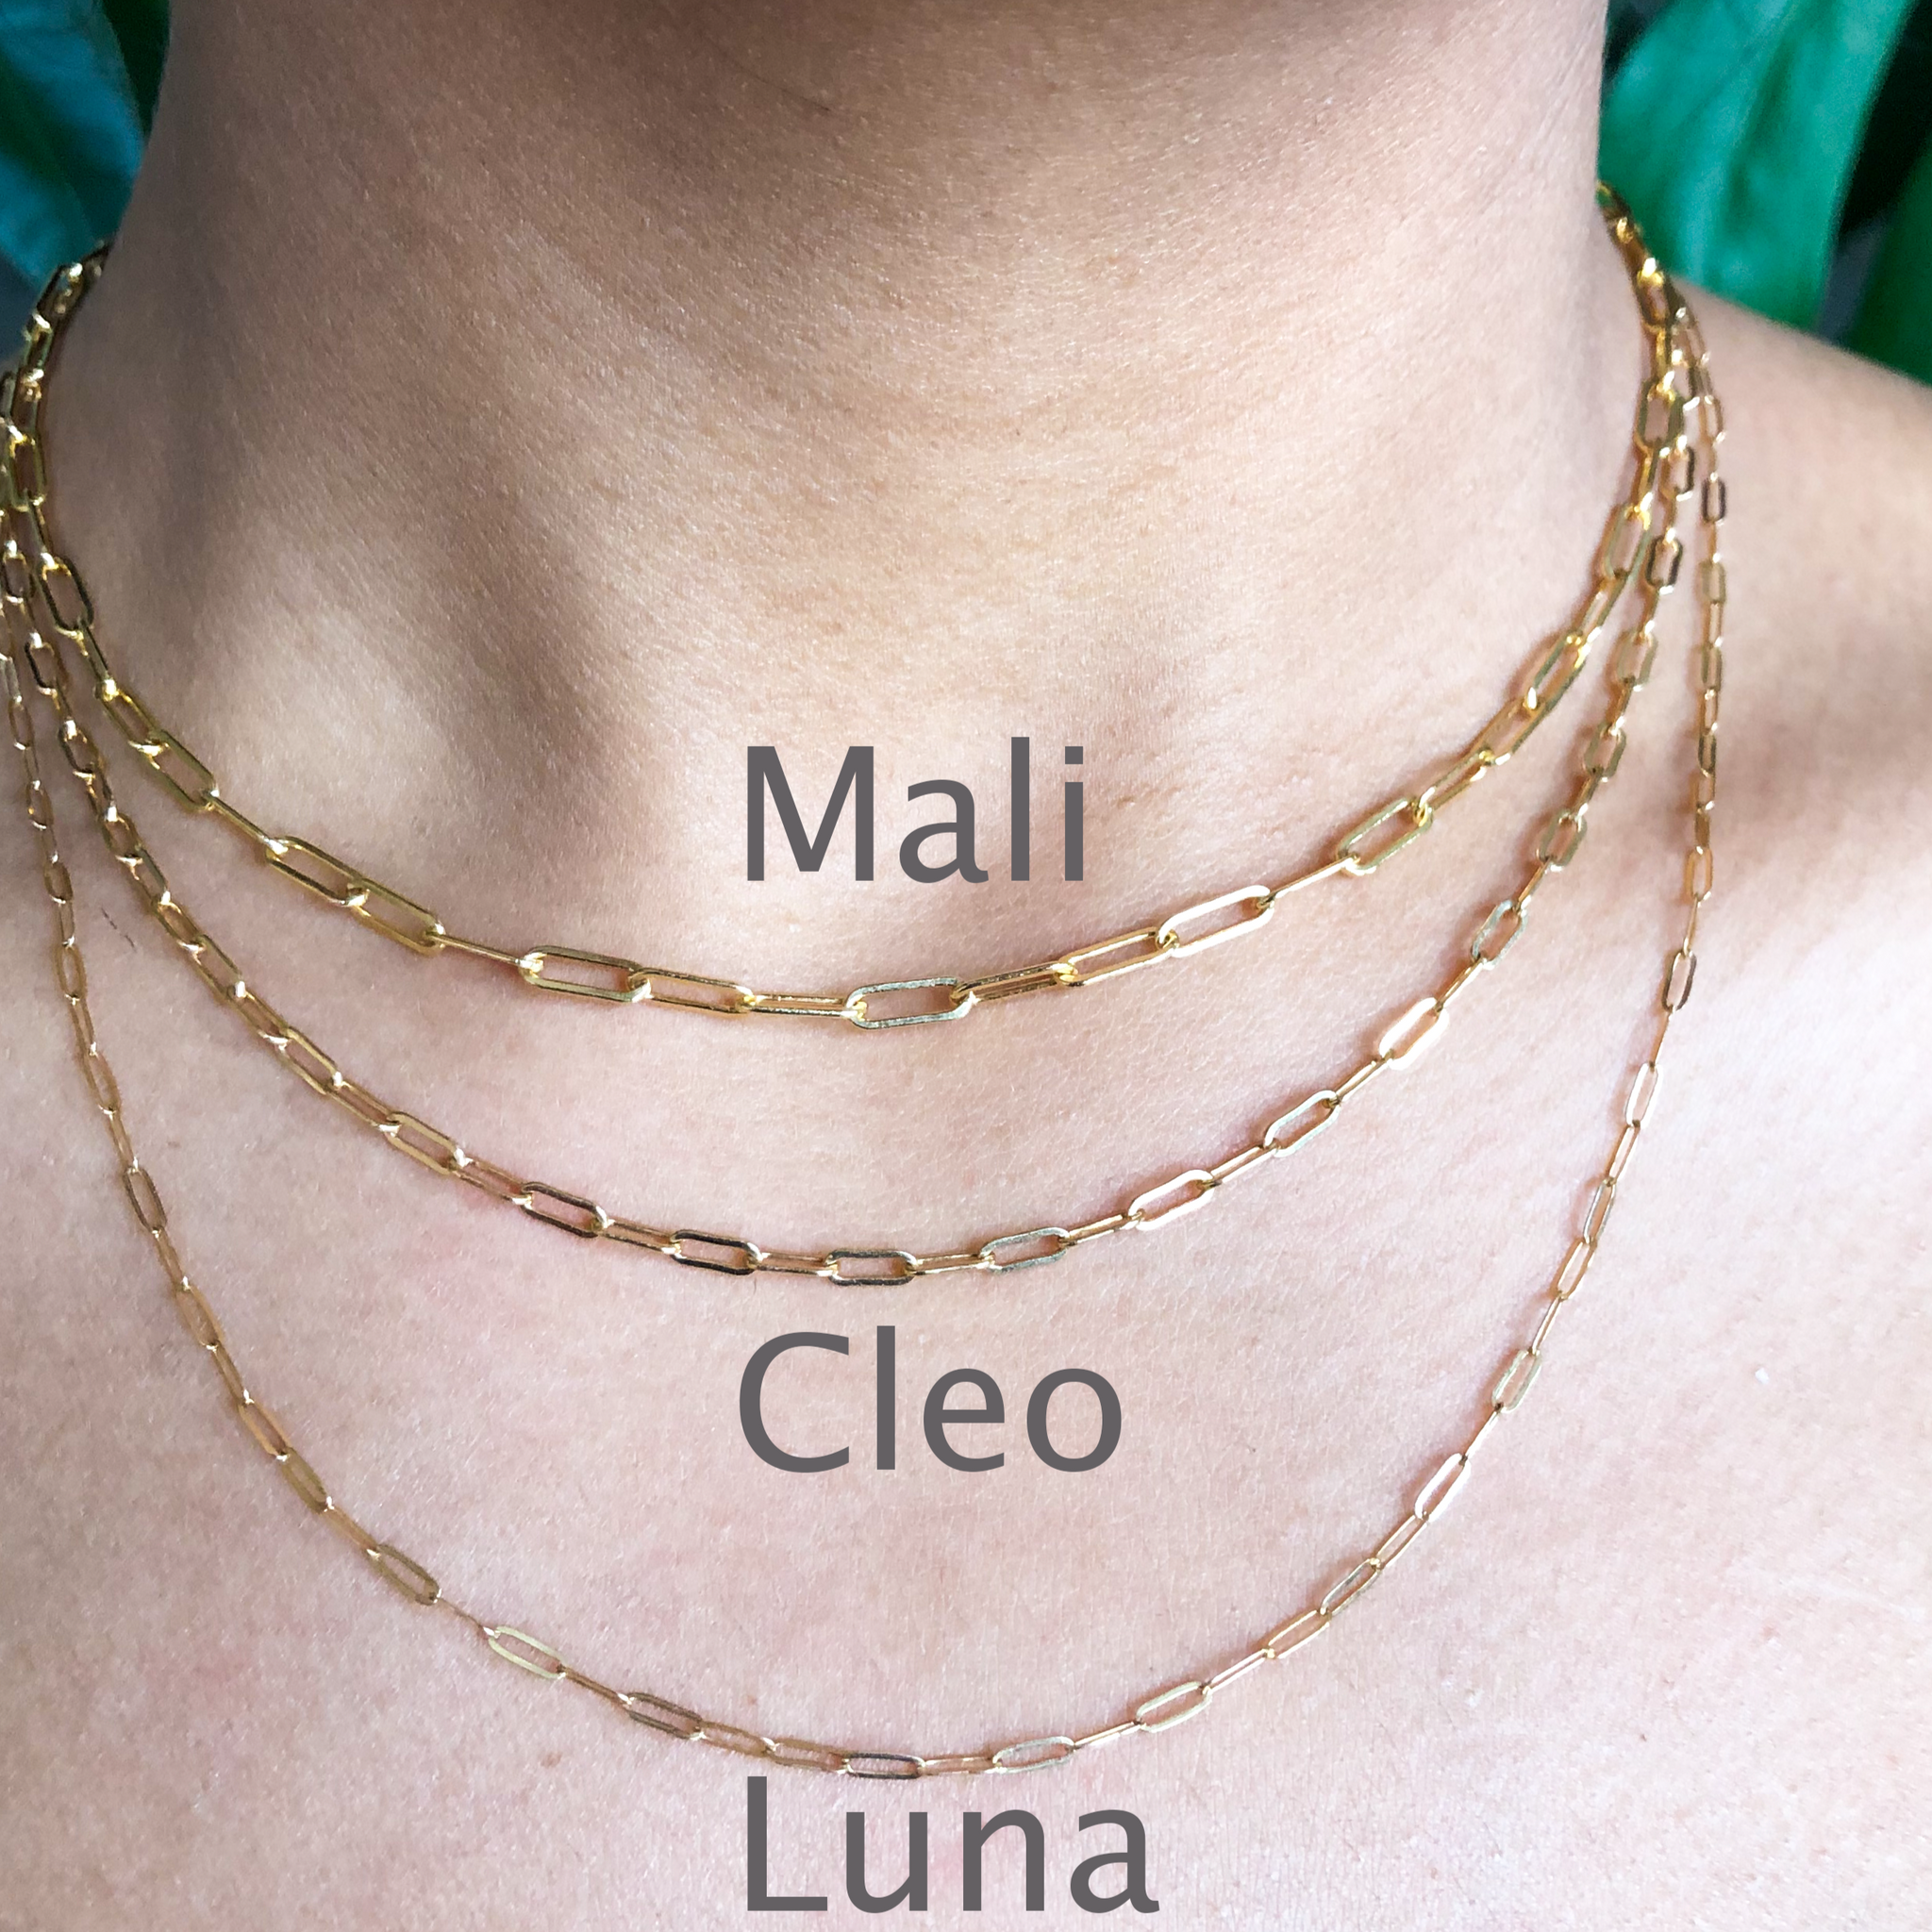 Cleo Necklace